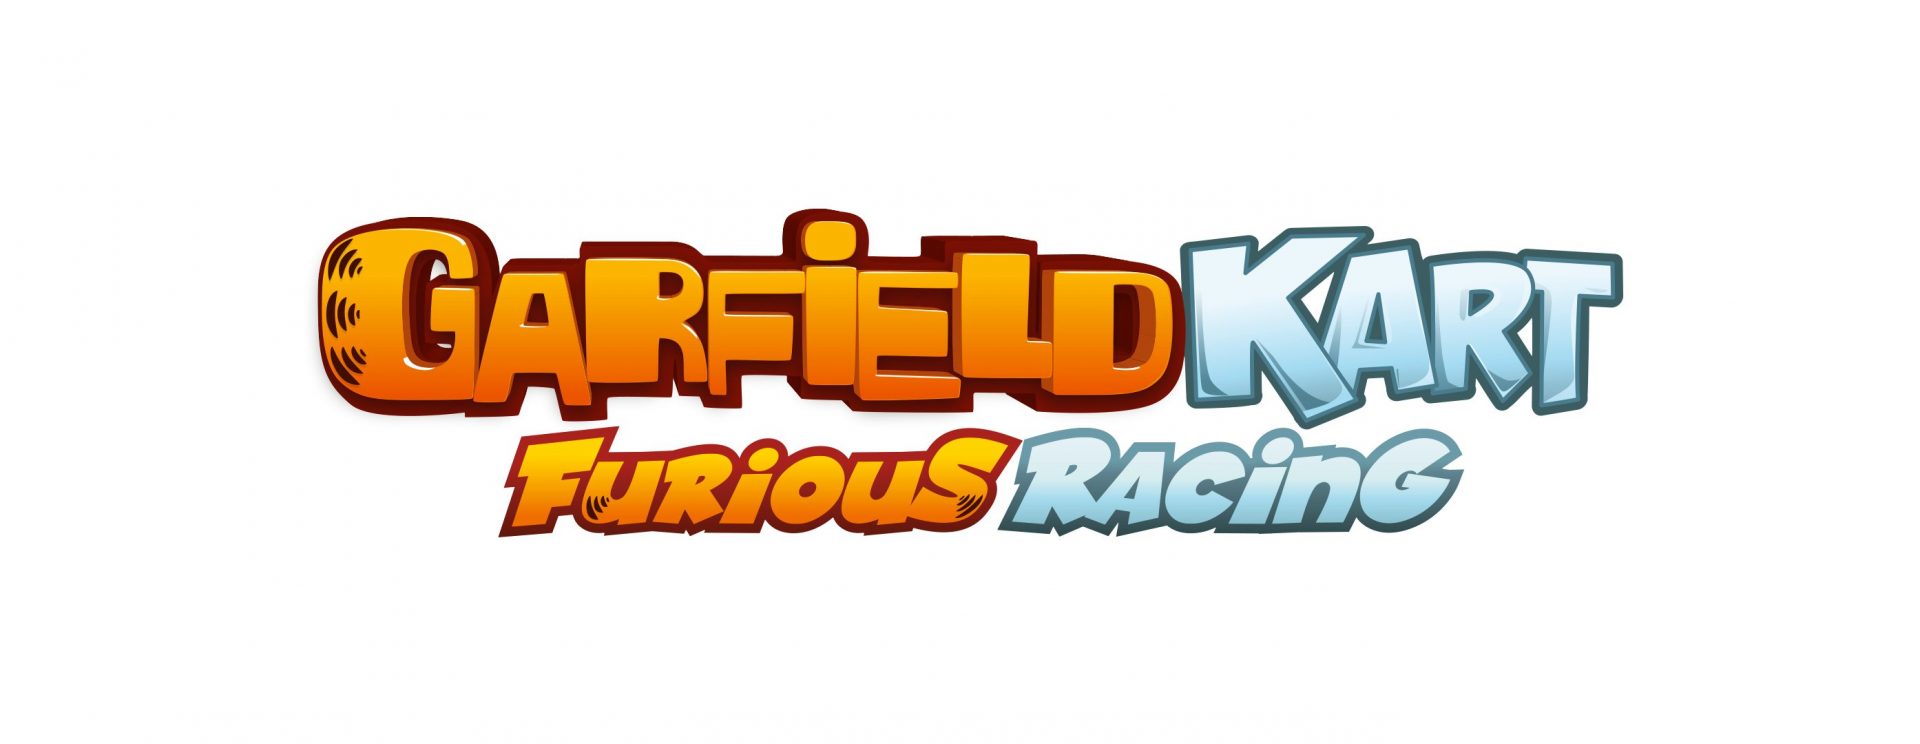 garfield kart furious racing xbox one